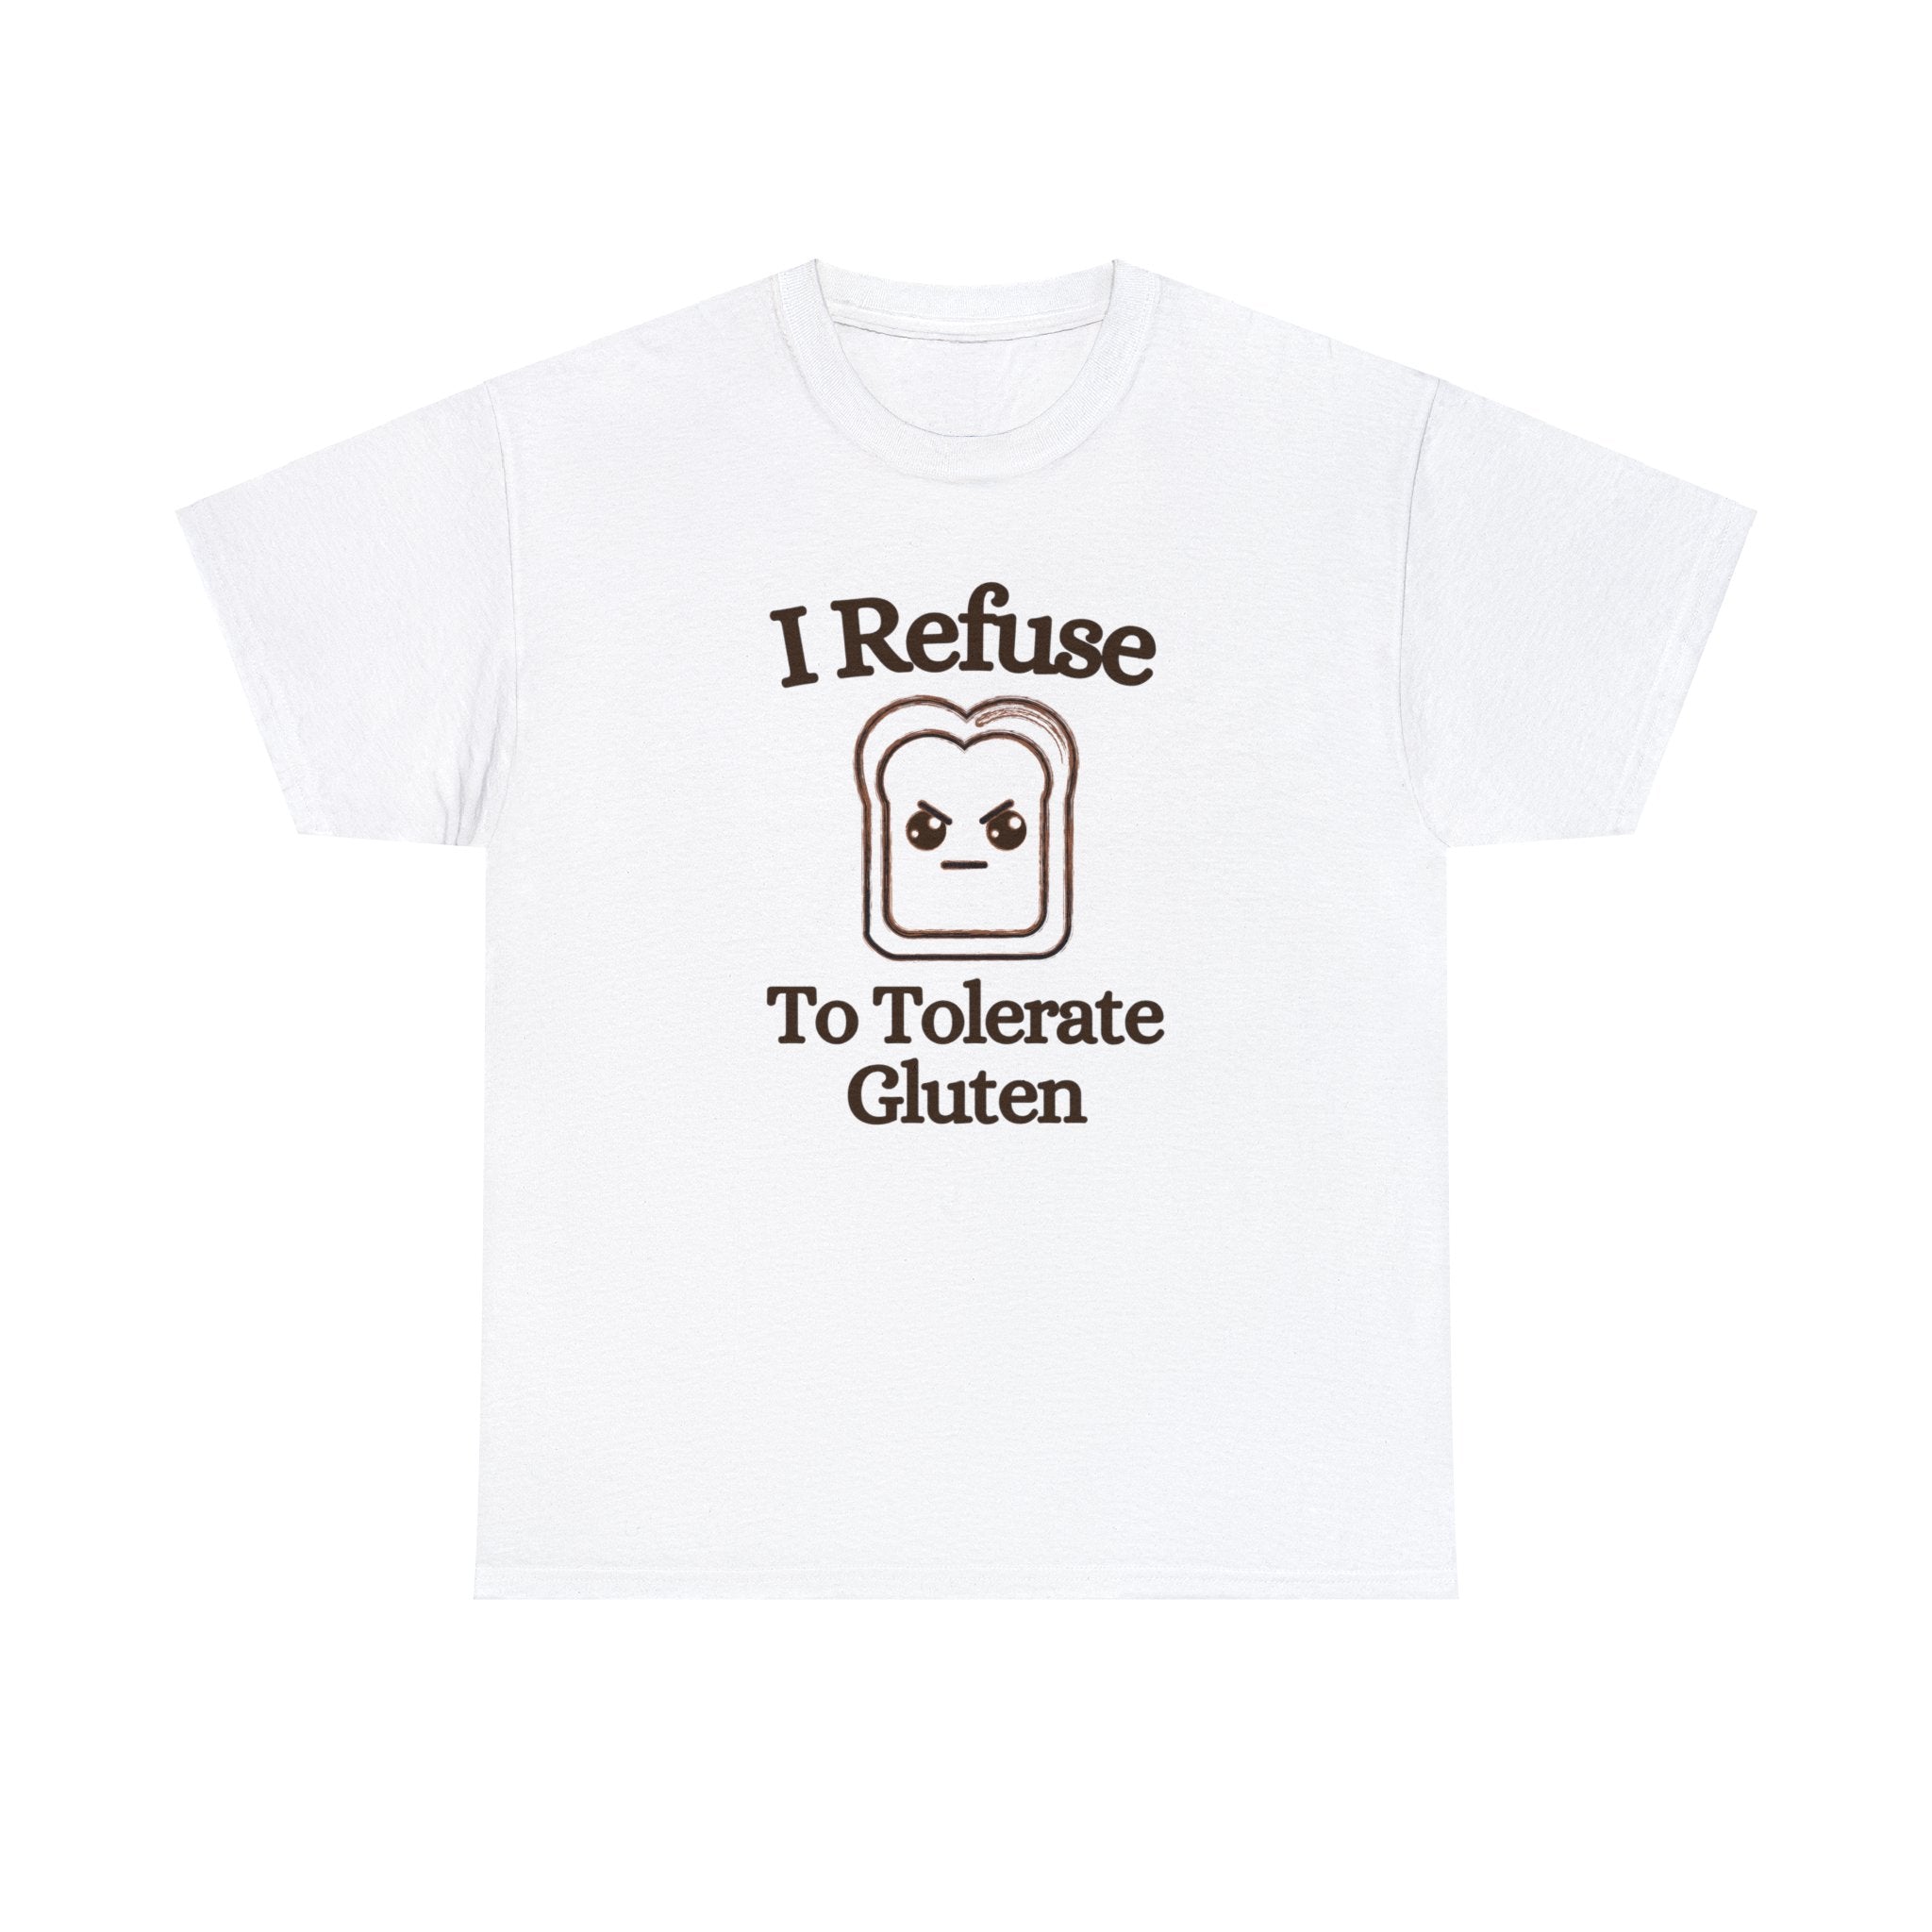 I Refuse to Tolerate Gluten Shirt